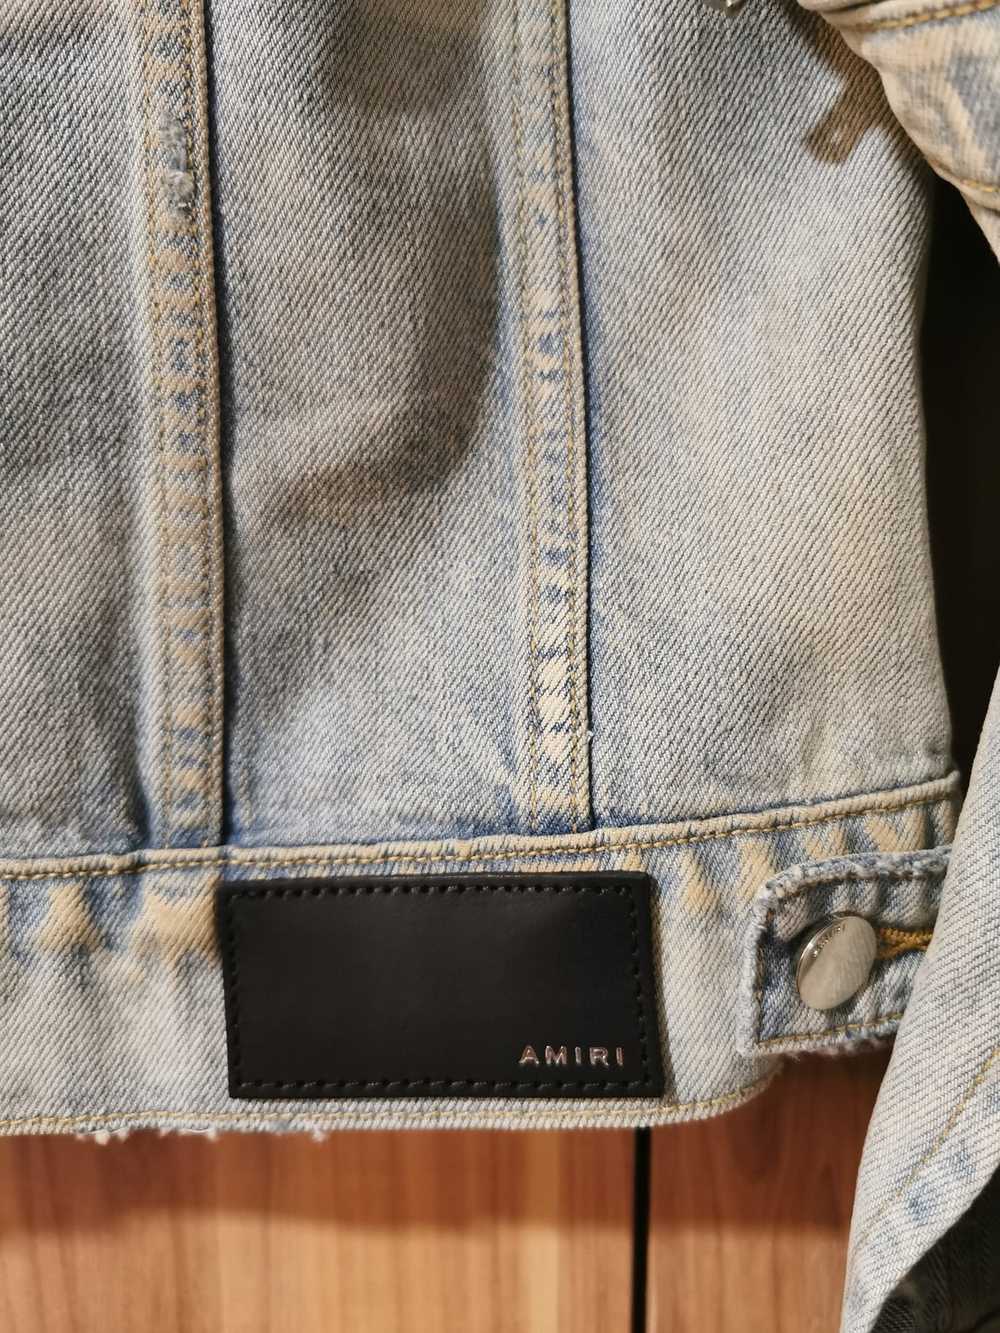 Amiri Amiri MX2 denim jacket - image 4